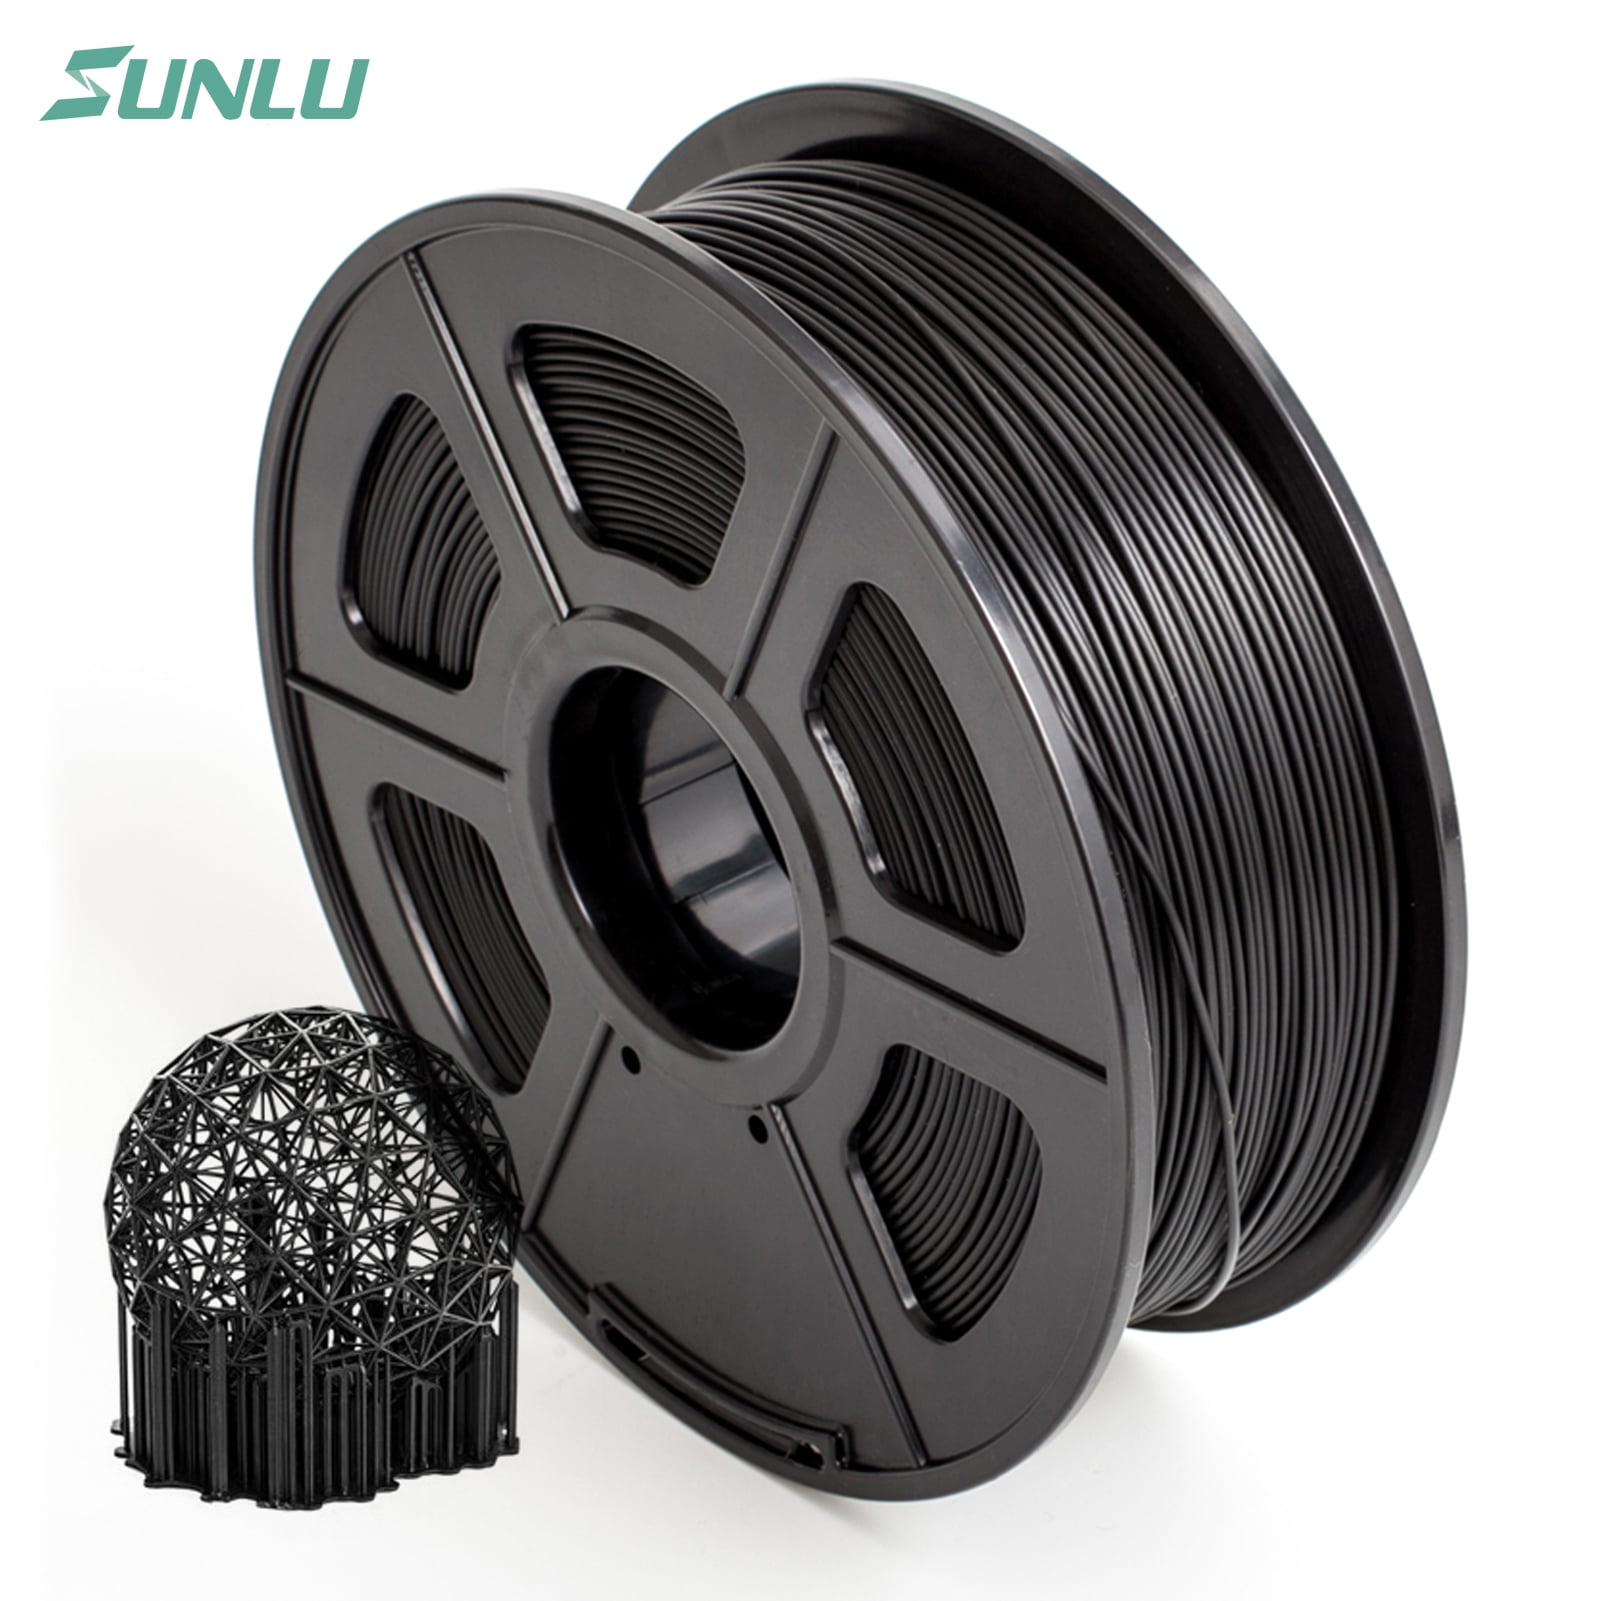 1KG SUNLU 3D Printer Filament PLA Plus Spool for 3D Printers & 3D Pens Low Odor Dimensional Accuracy +/- 0.02 mm,3D Printing Filament,2.2 LBS PLA+ Filament 1.75 mm 